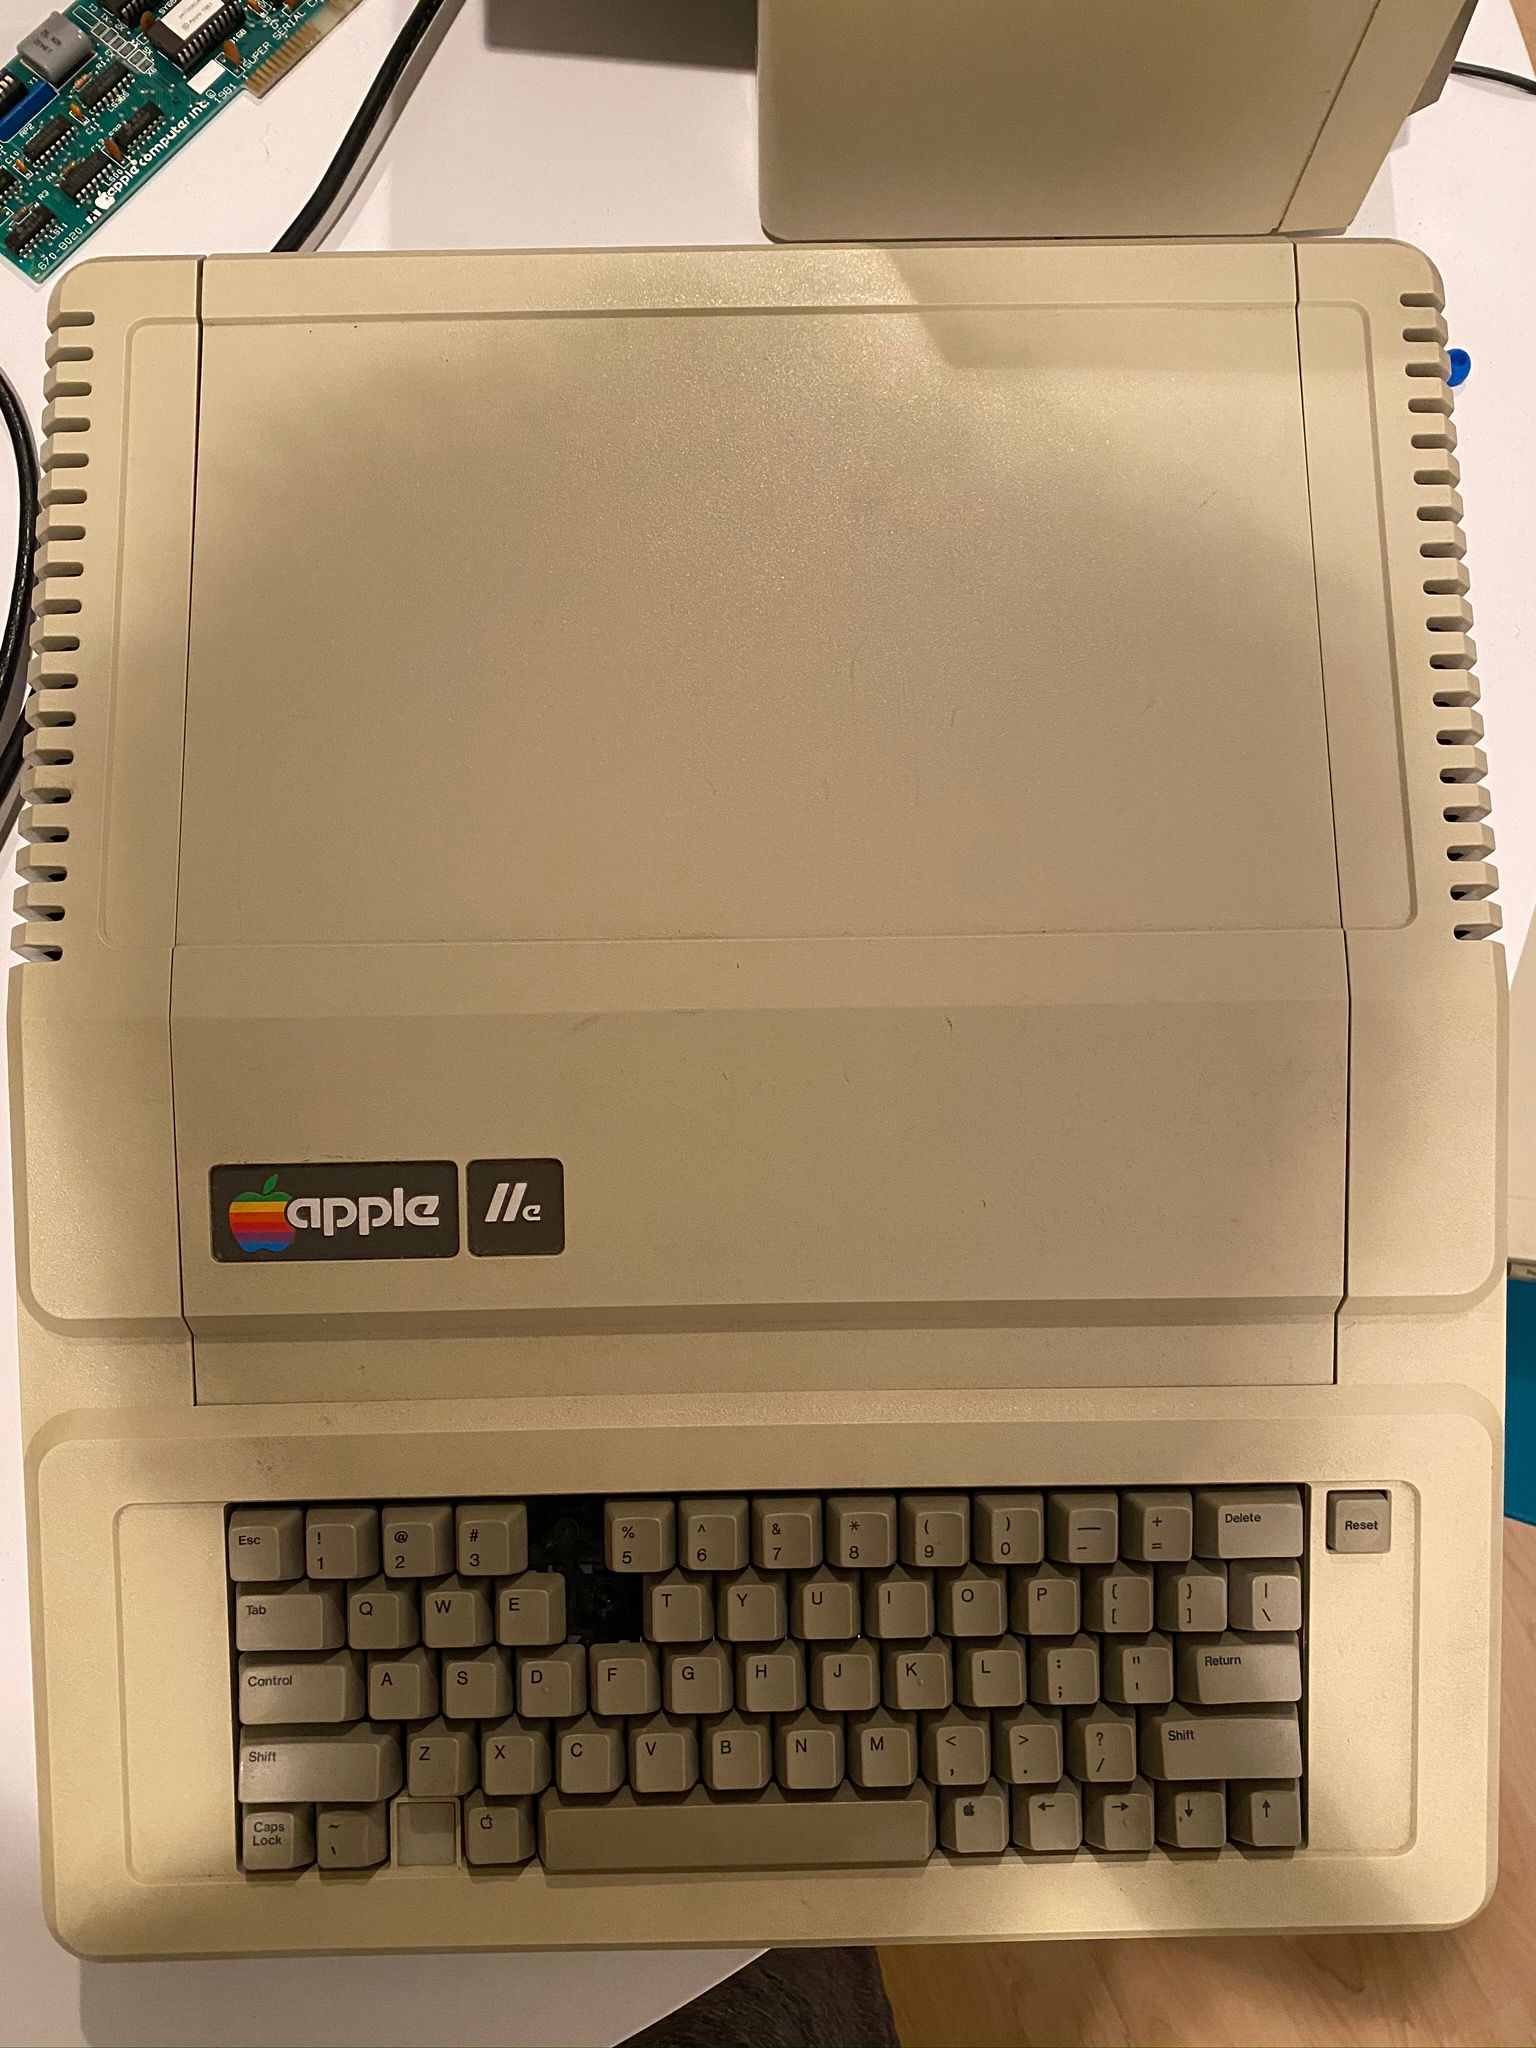 Apple IIe top down